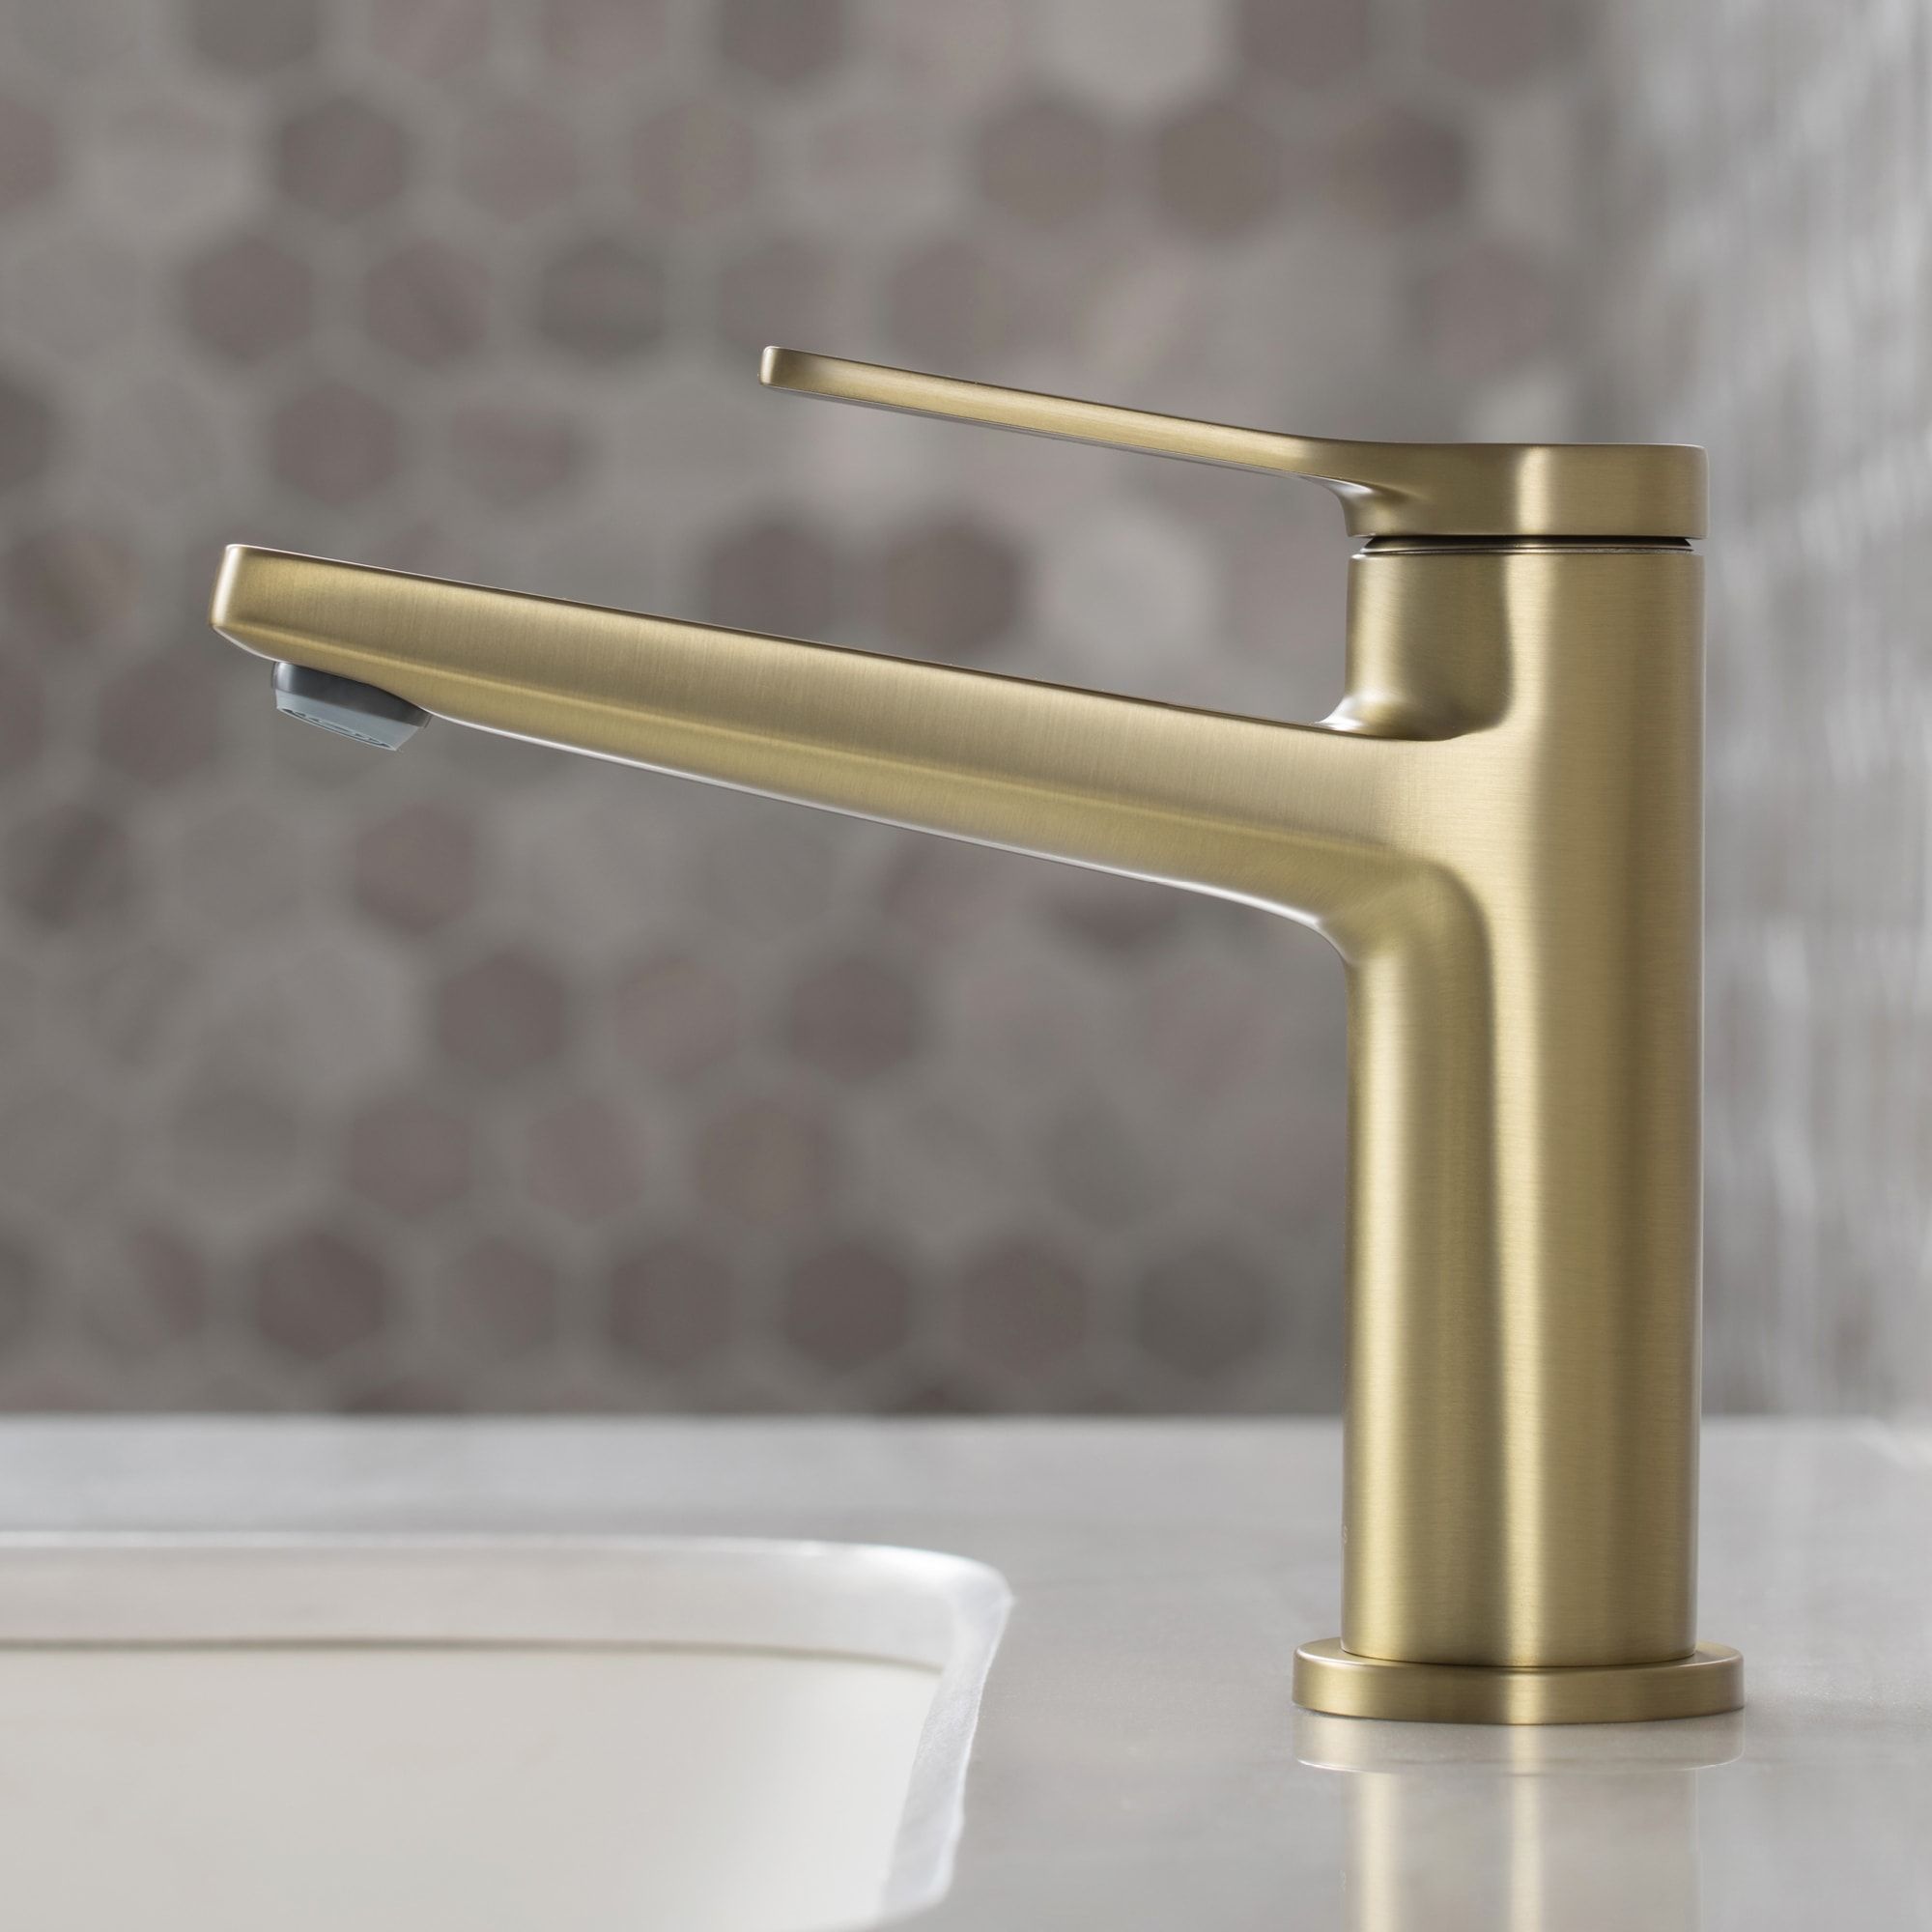 Buy a bathroom sink faucet in gold color